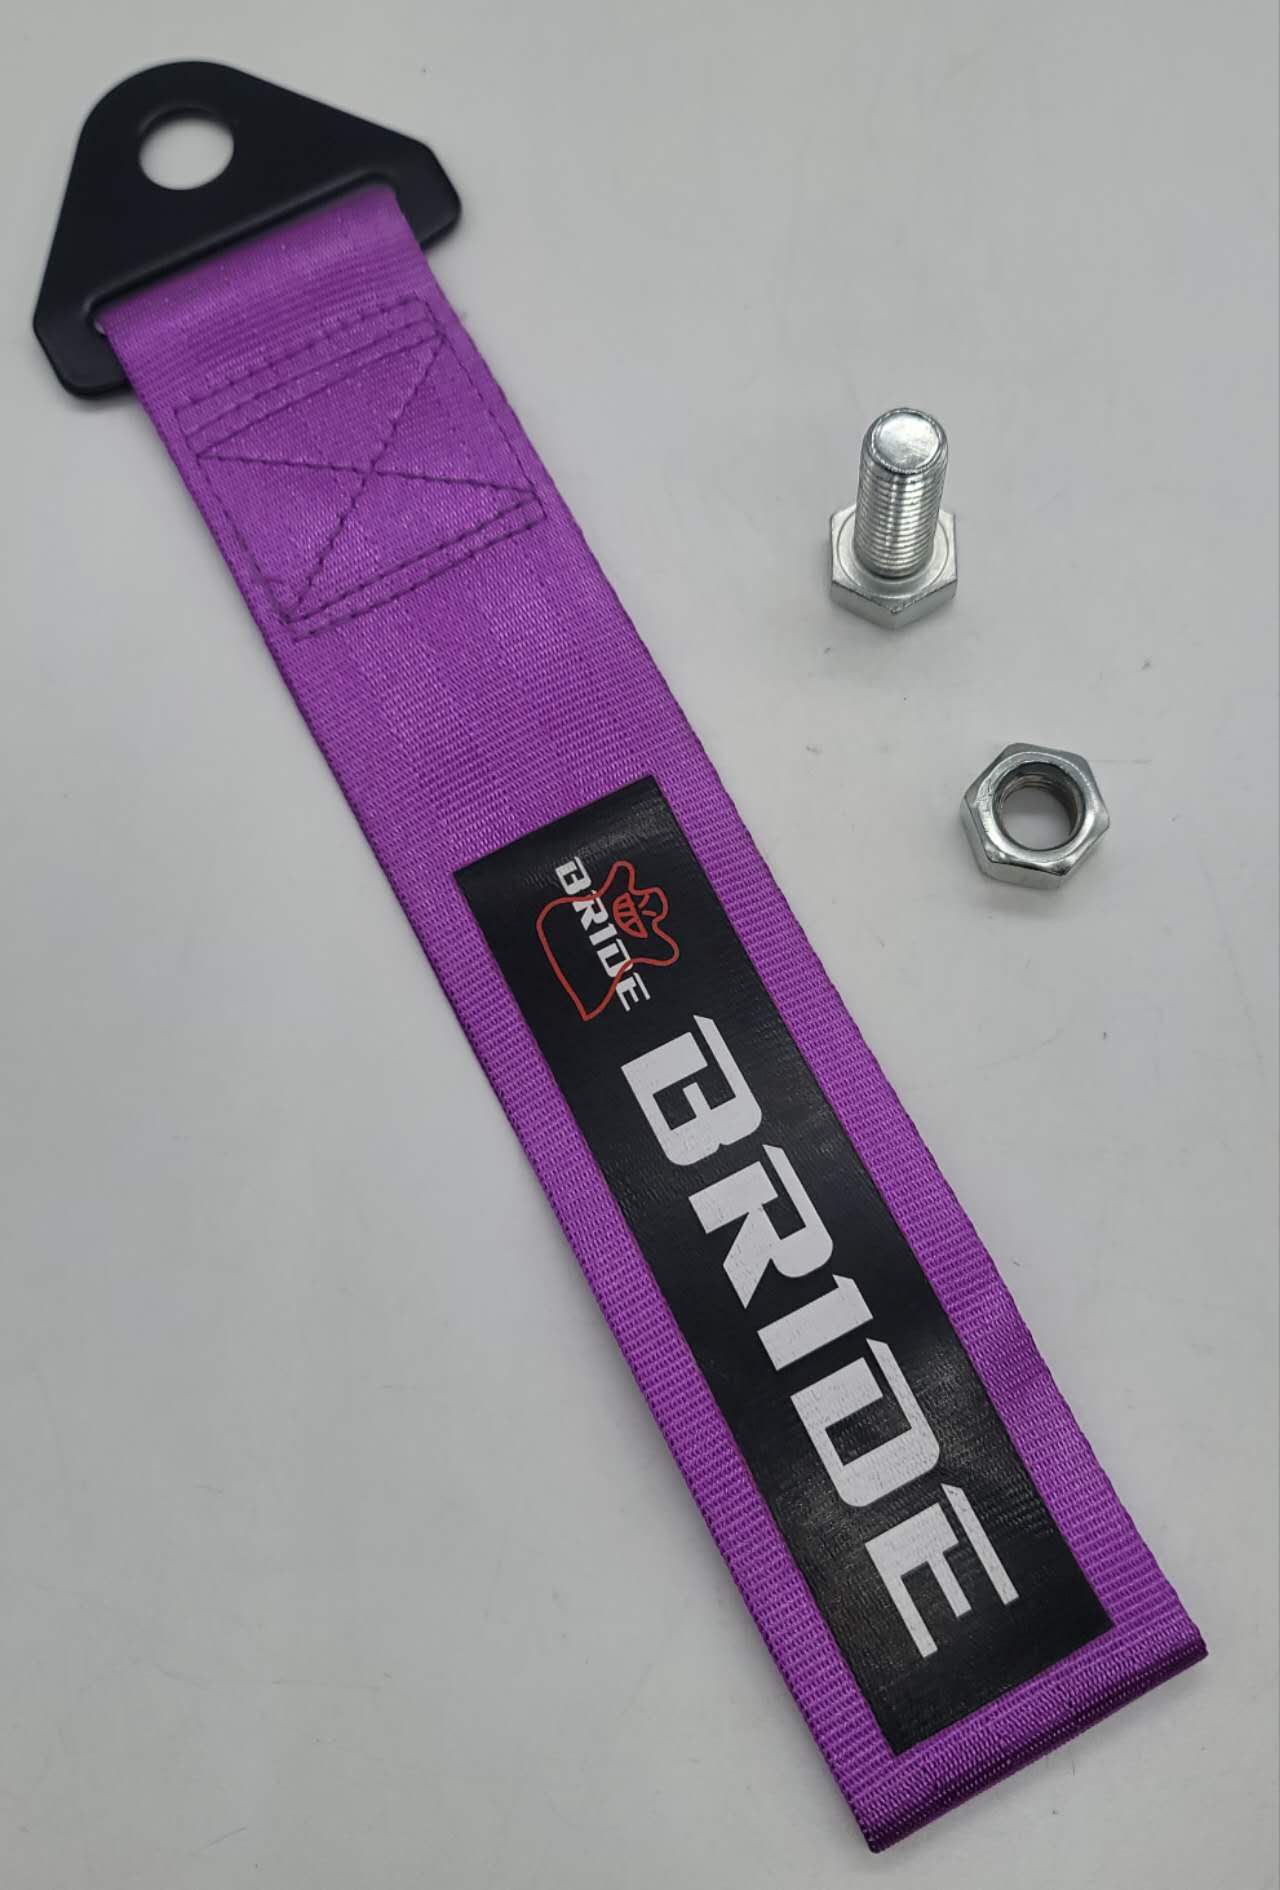  KIMISS Front Rear Towing Hook Set, Purple Universal